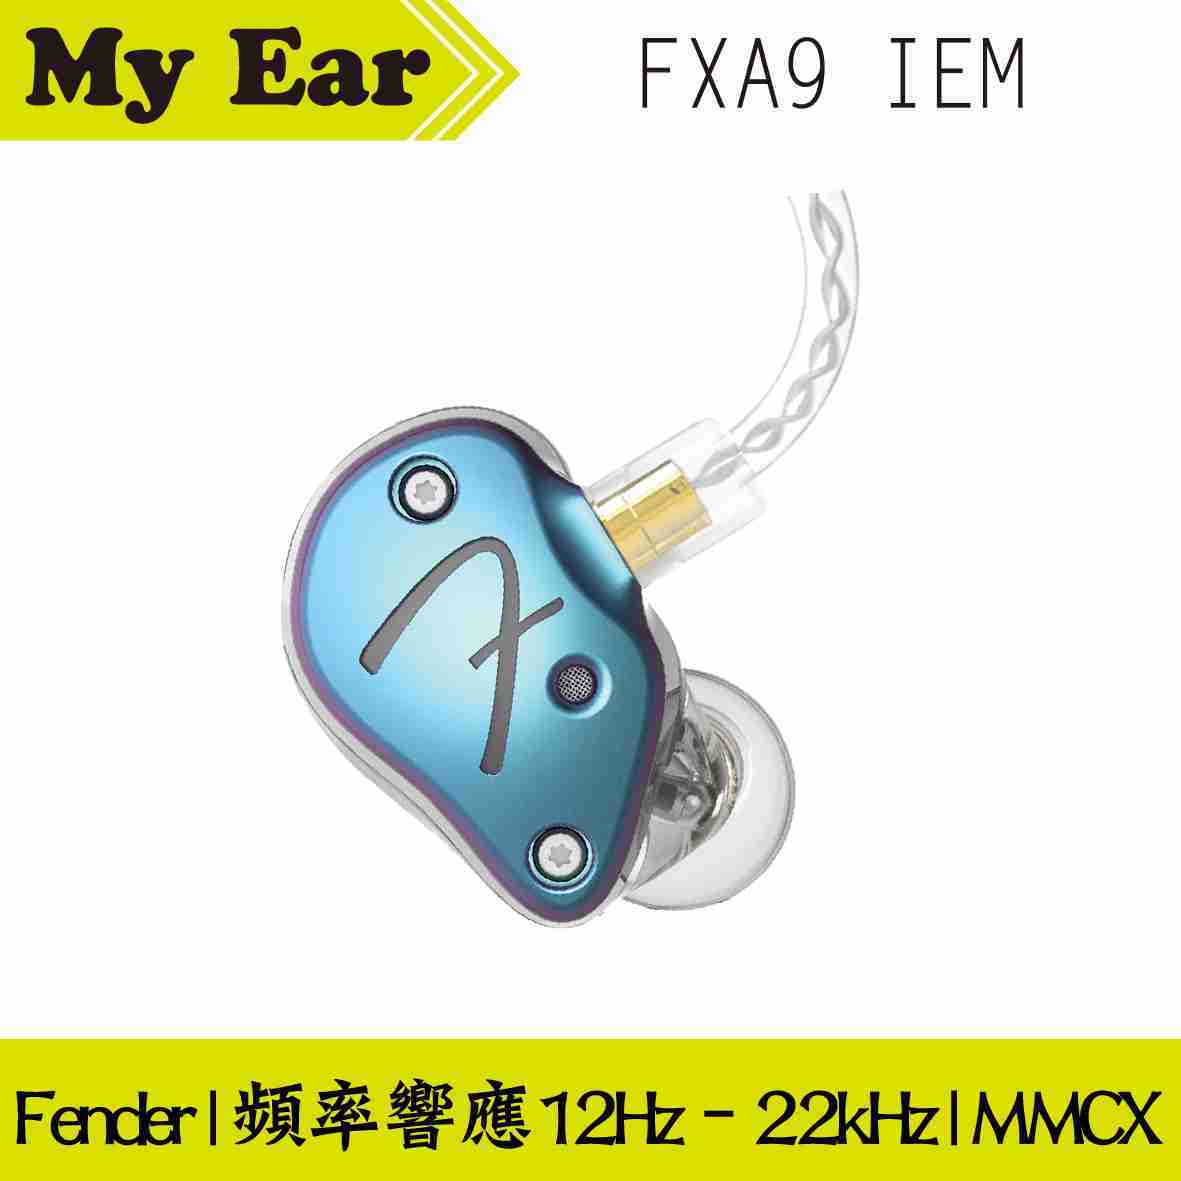 Fender FXA9 IEM 變色龍漸變 入耳式 監聽級 耳機 | My Ear耳機專門店